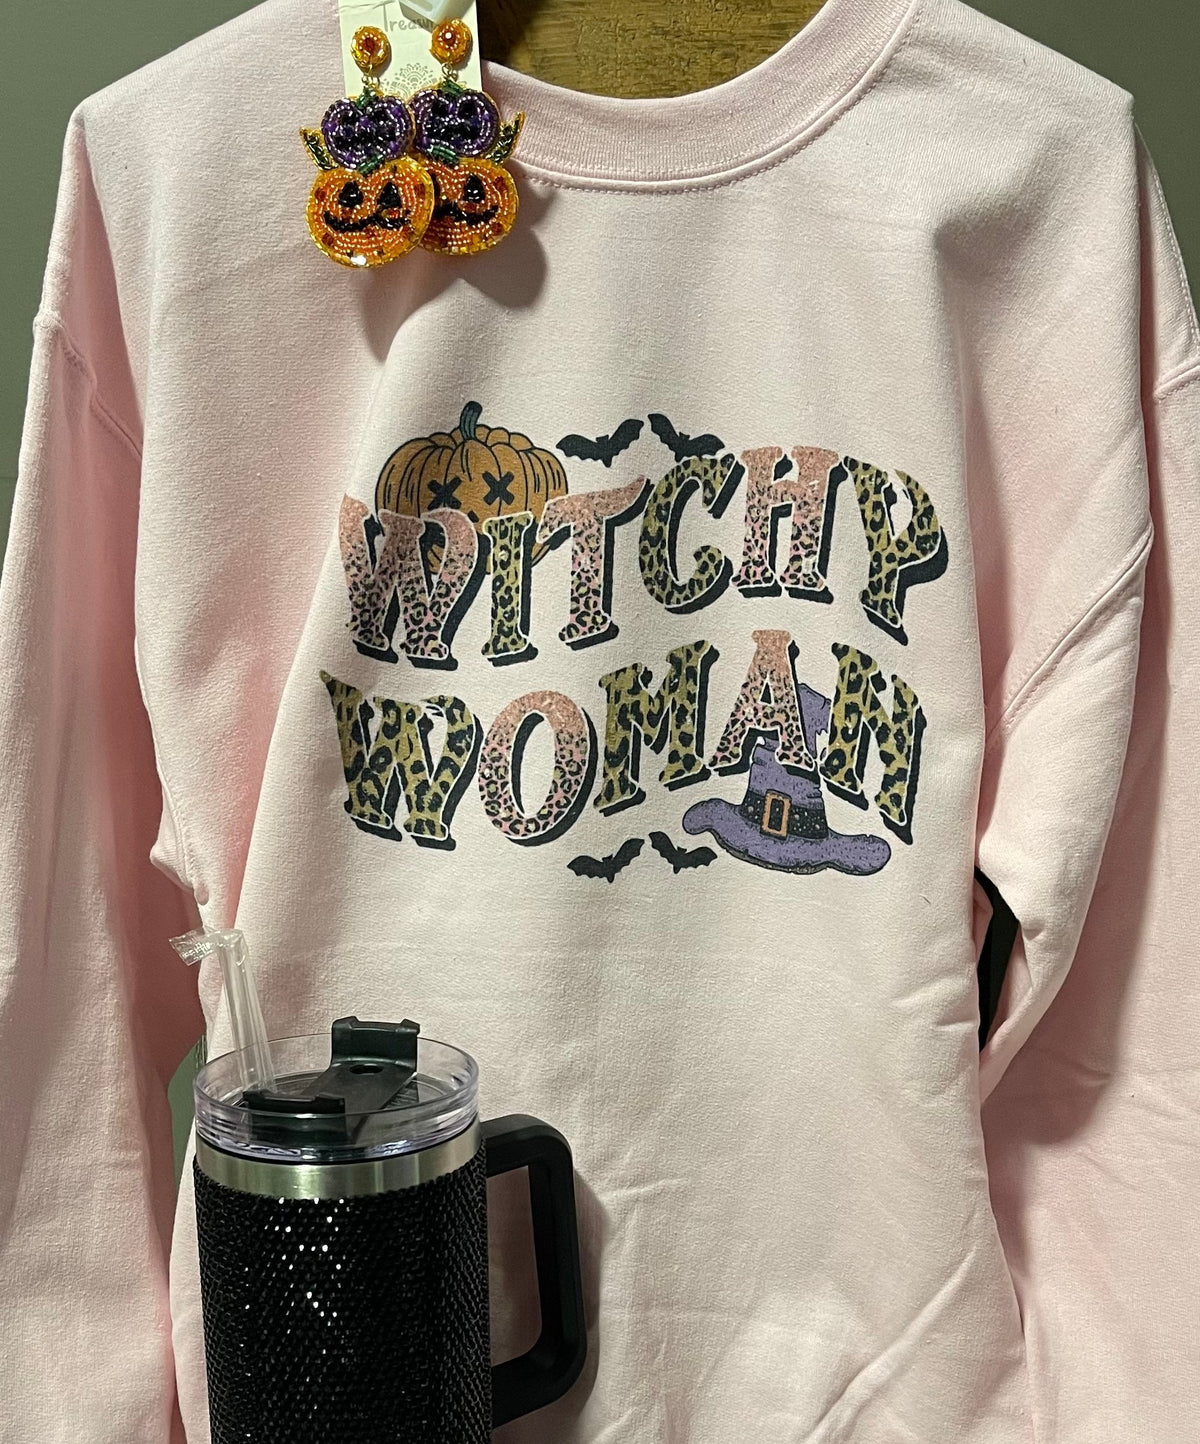 Witchy Woman Graphic Crewneck Sweatshirt